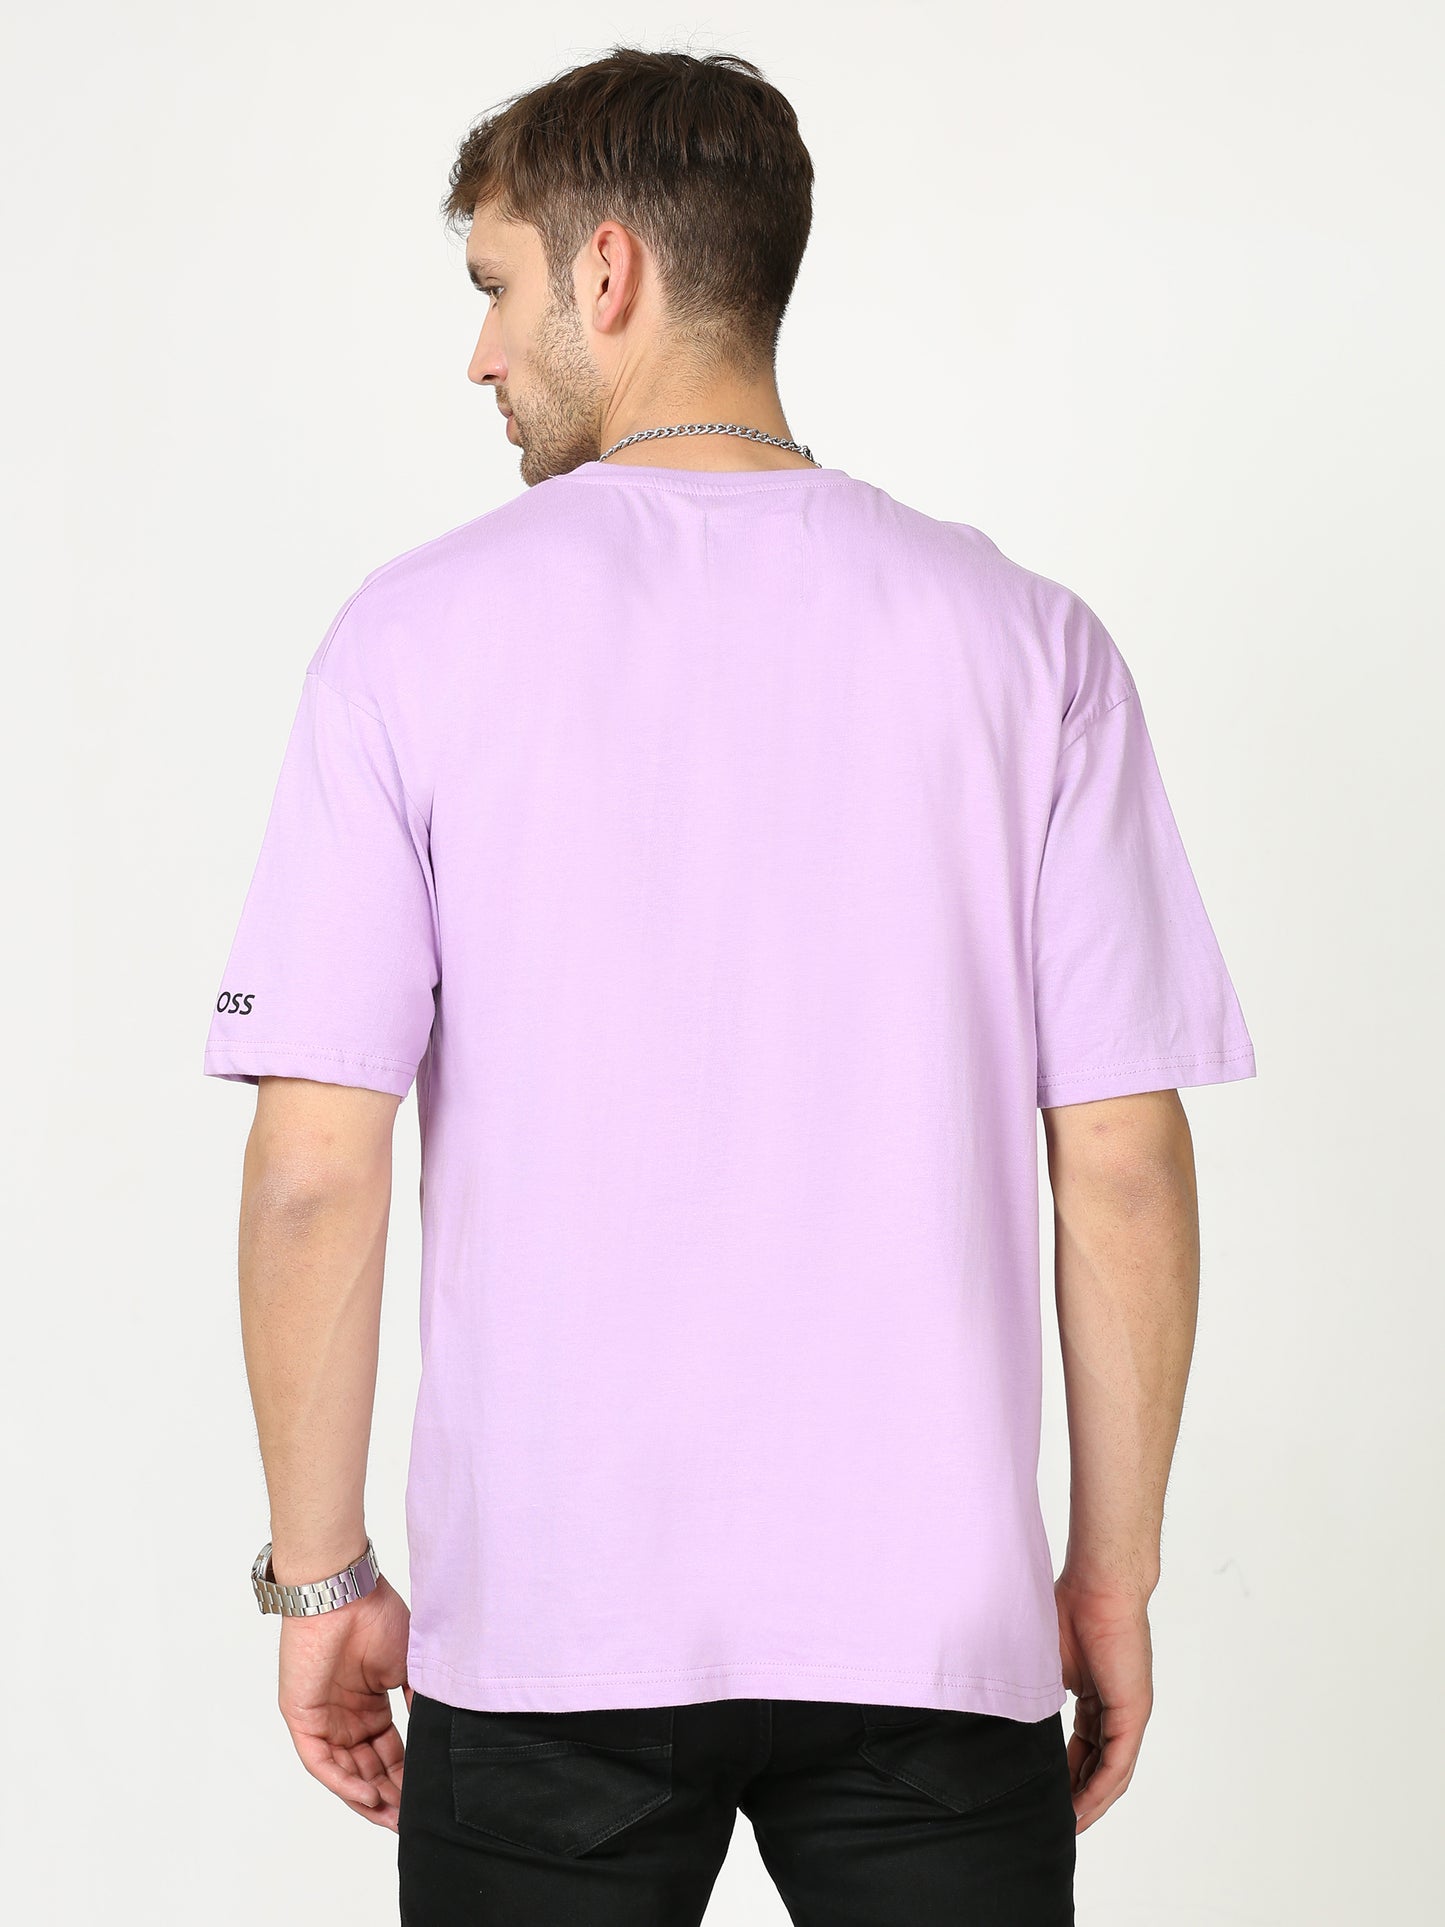 Purple Pancake Printed Oversized T-shirt